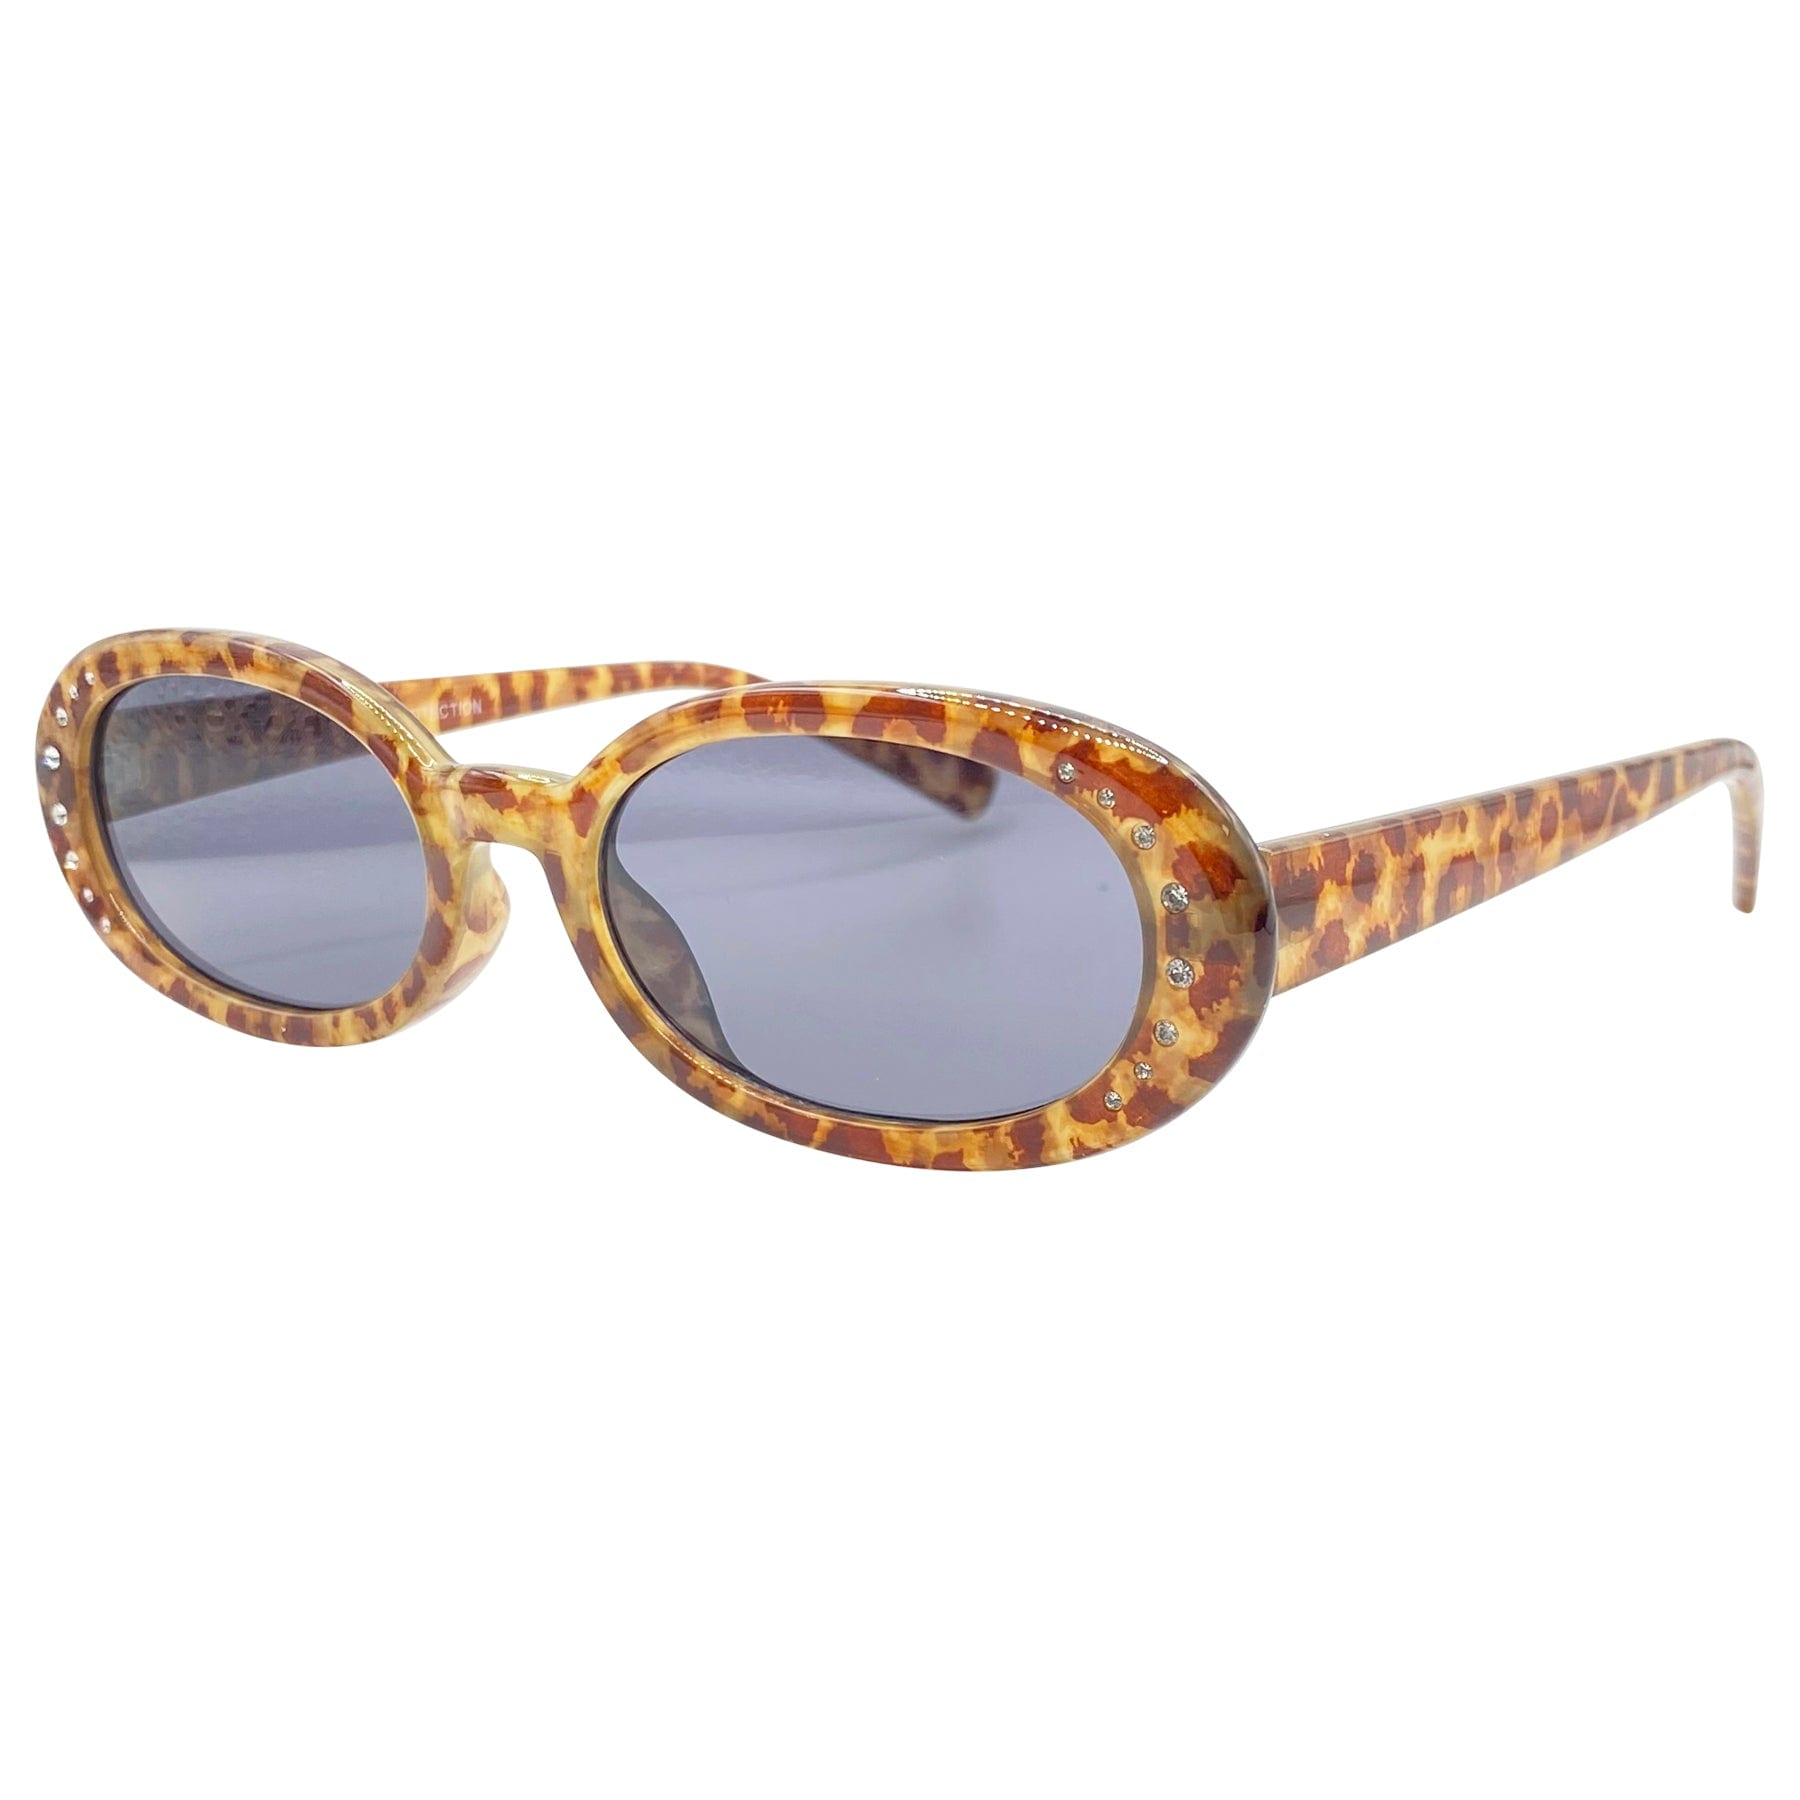 90s style animal print funky sunglasses